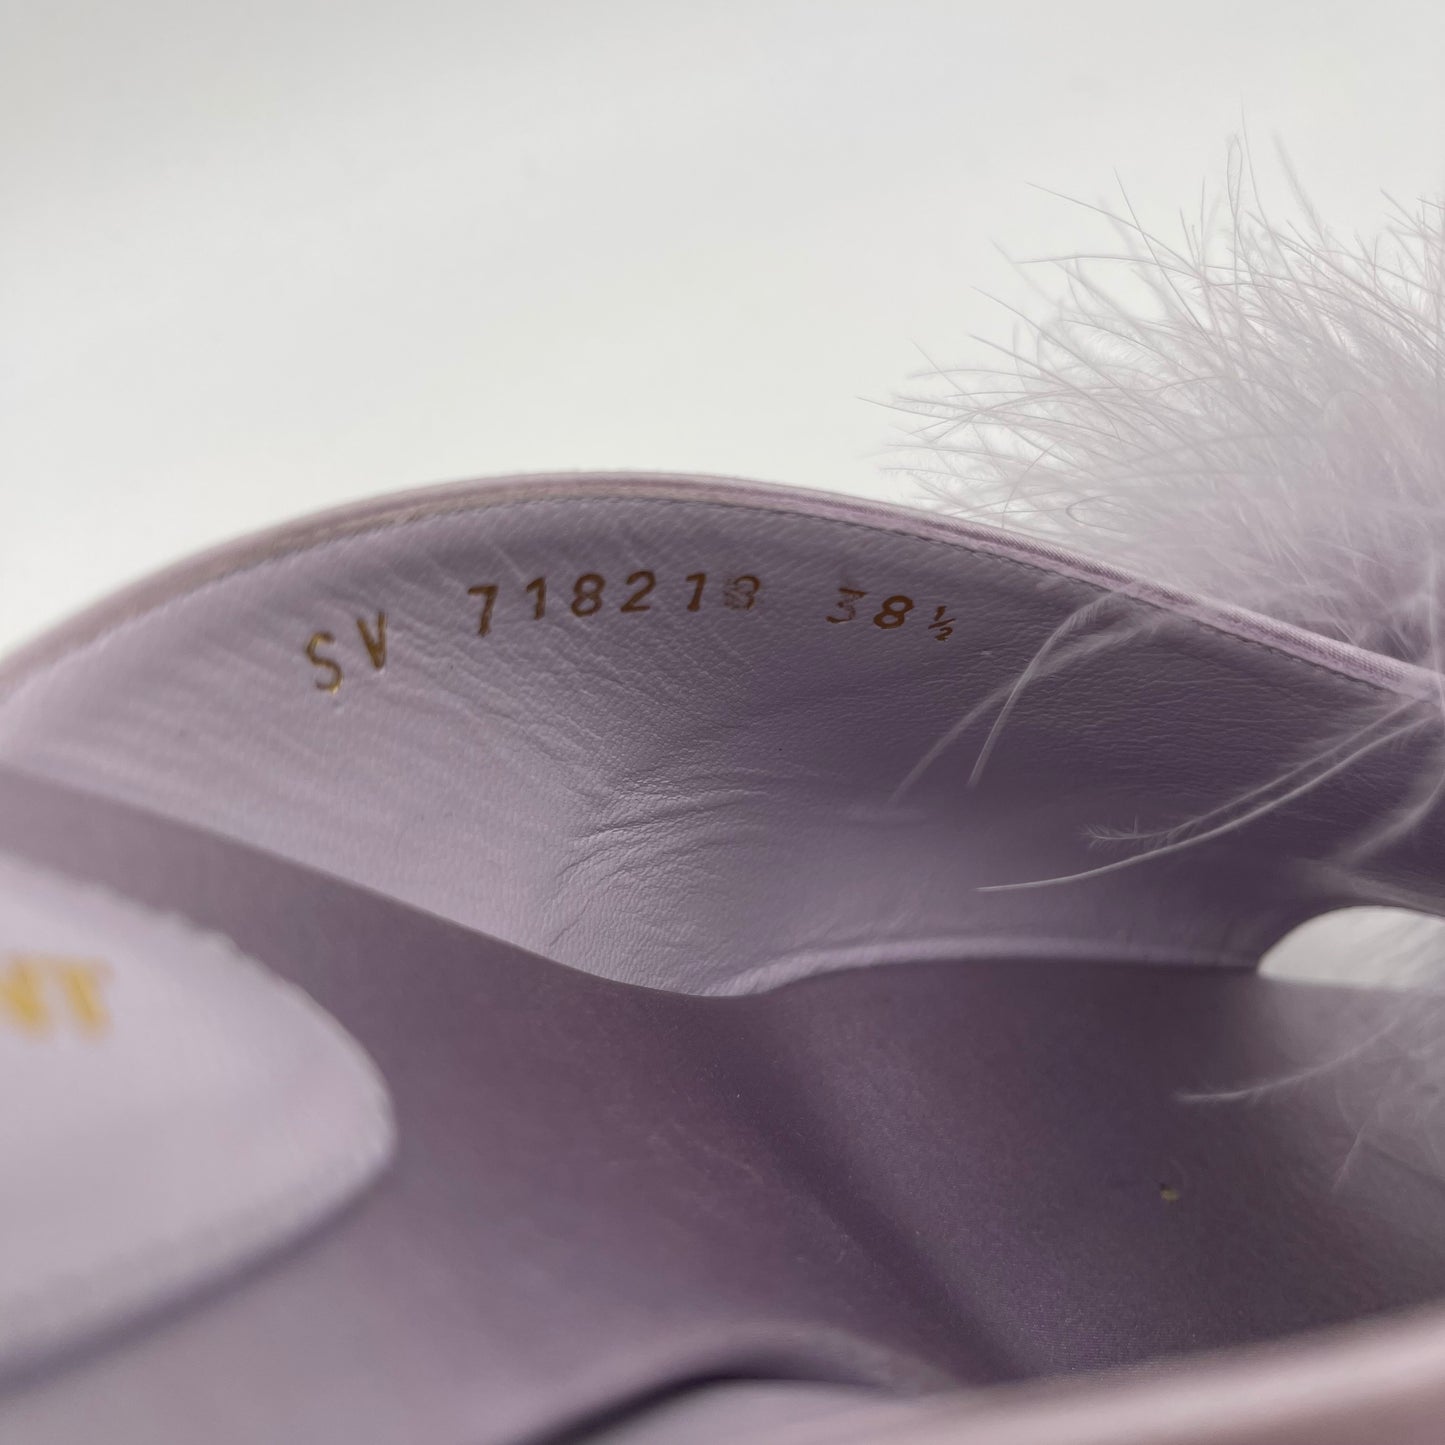 Sandals Luxury Designer By Yves Saint Laurent  Size: 8.5